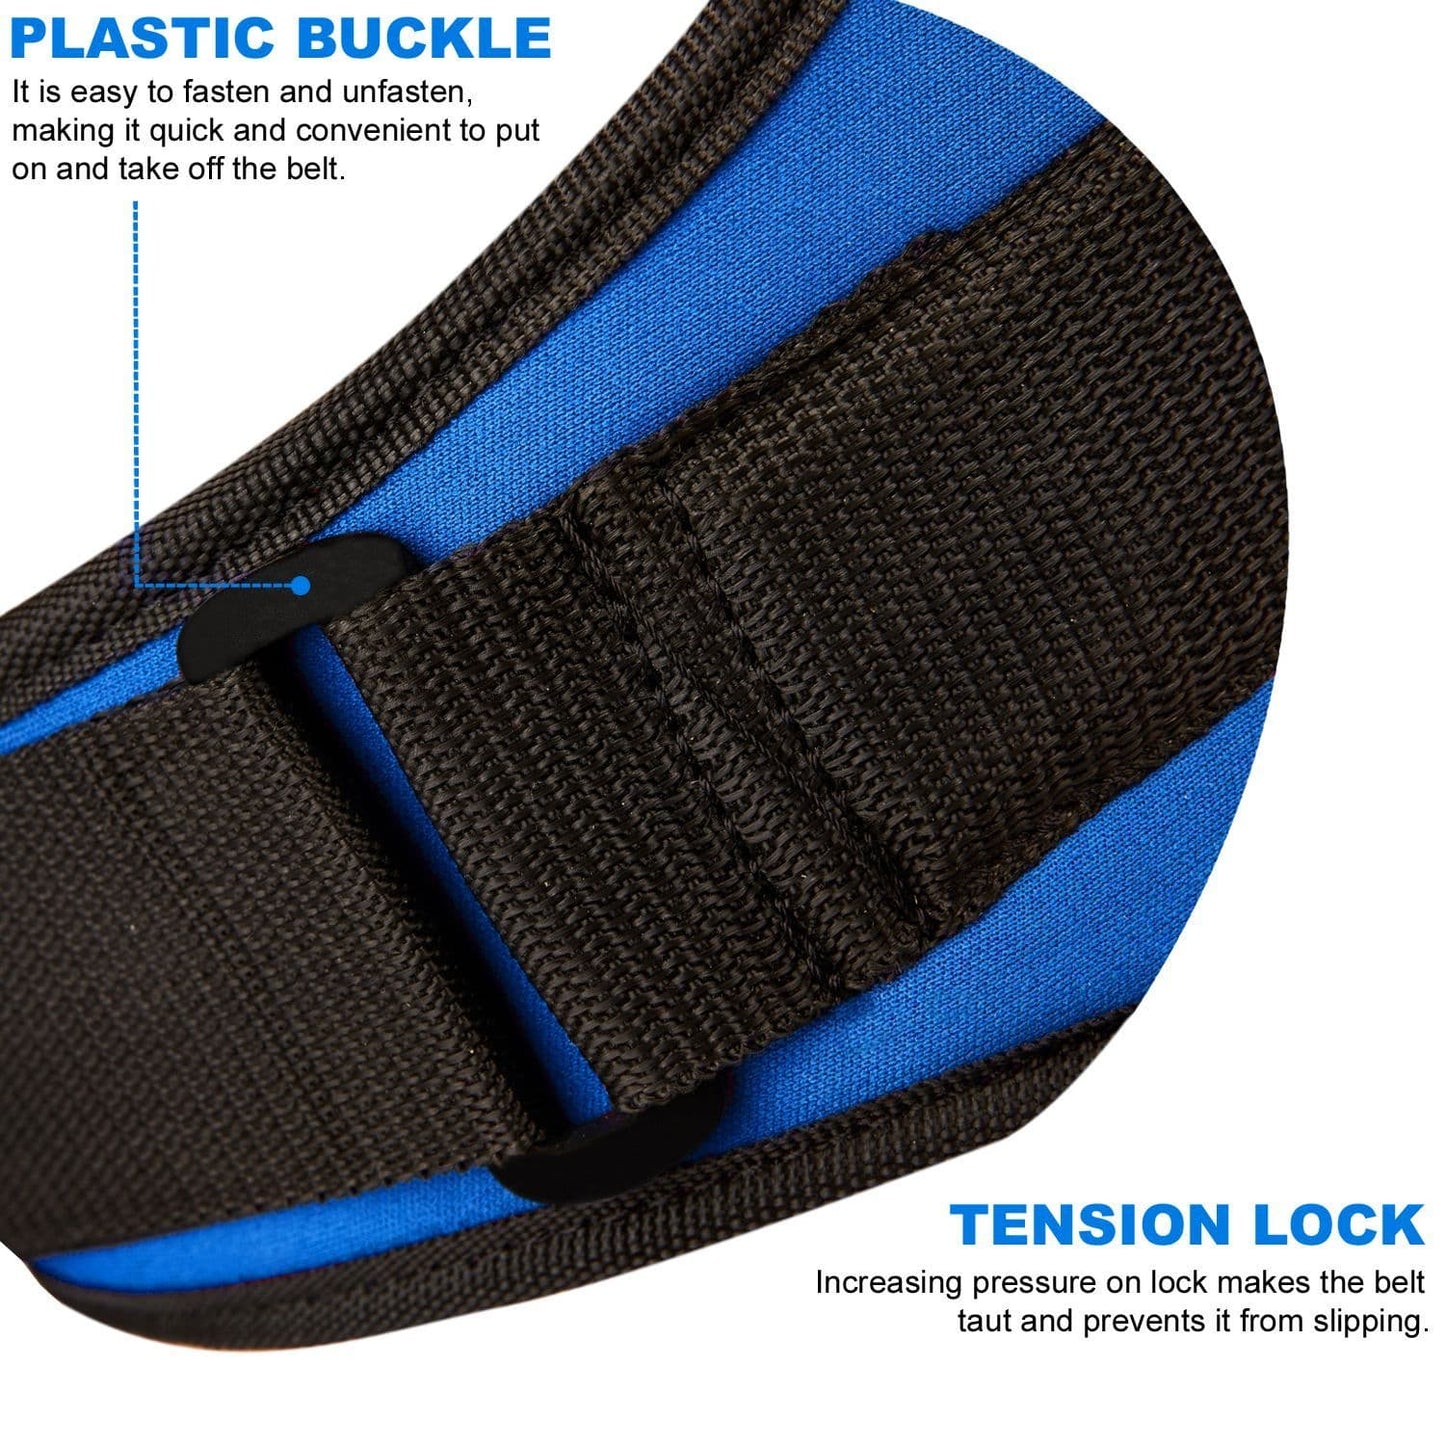 X MAXSTRENGTH Neoprene Weightlifting Back Support Belt Blue